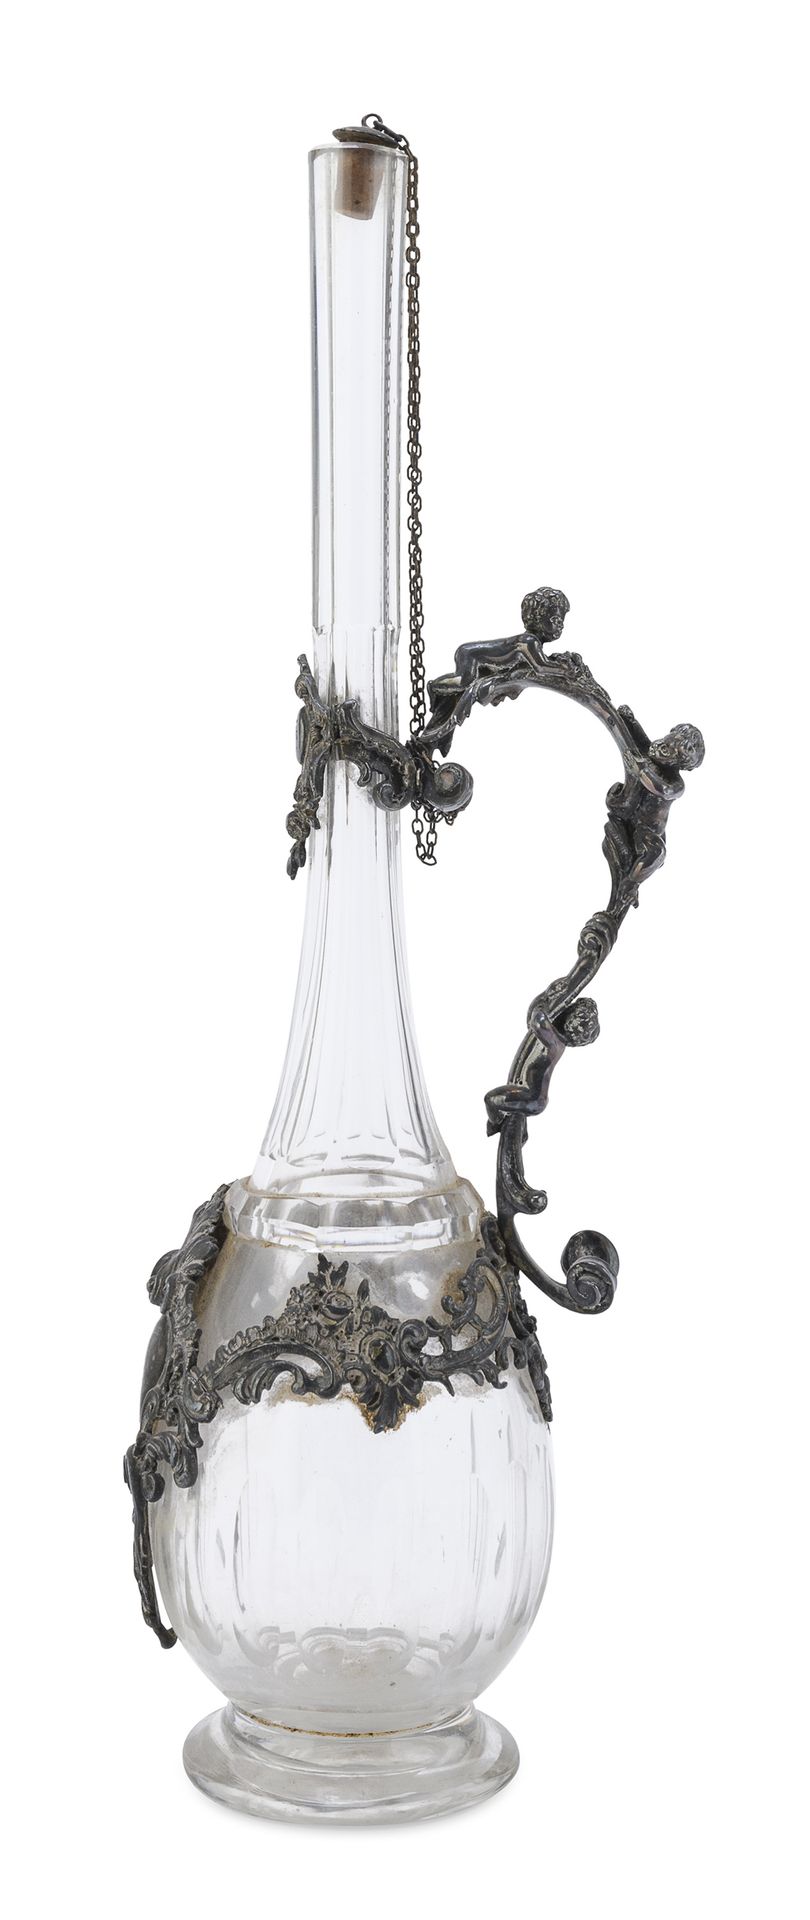 Null 罕见的切割玻璃油瓶，19世纪末

壶身有贴花，银色的锡制手柄上有纹章图案，植物图案和紧贴手柄的丘比特。

尺寸为40 x 13 x 10厘米。